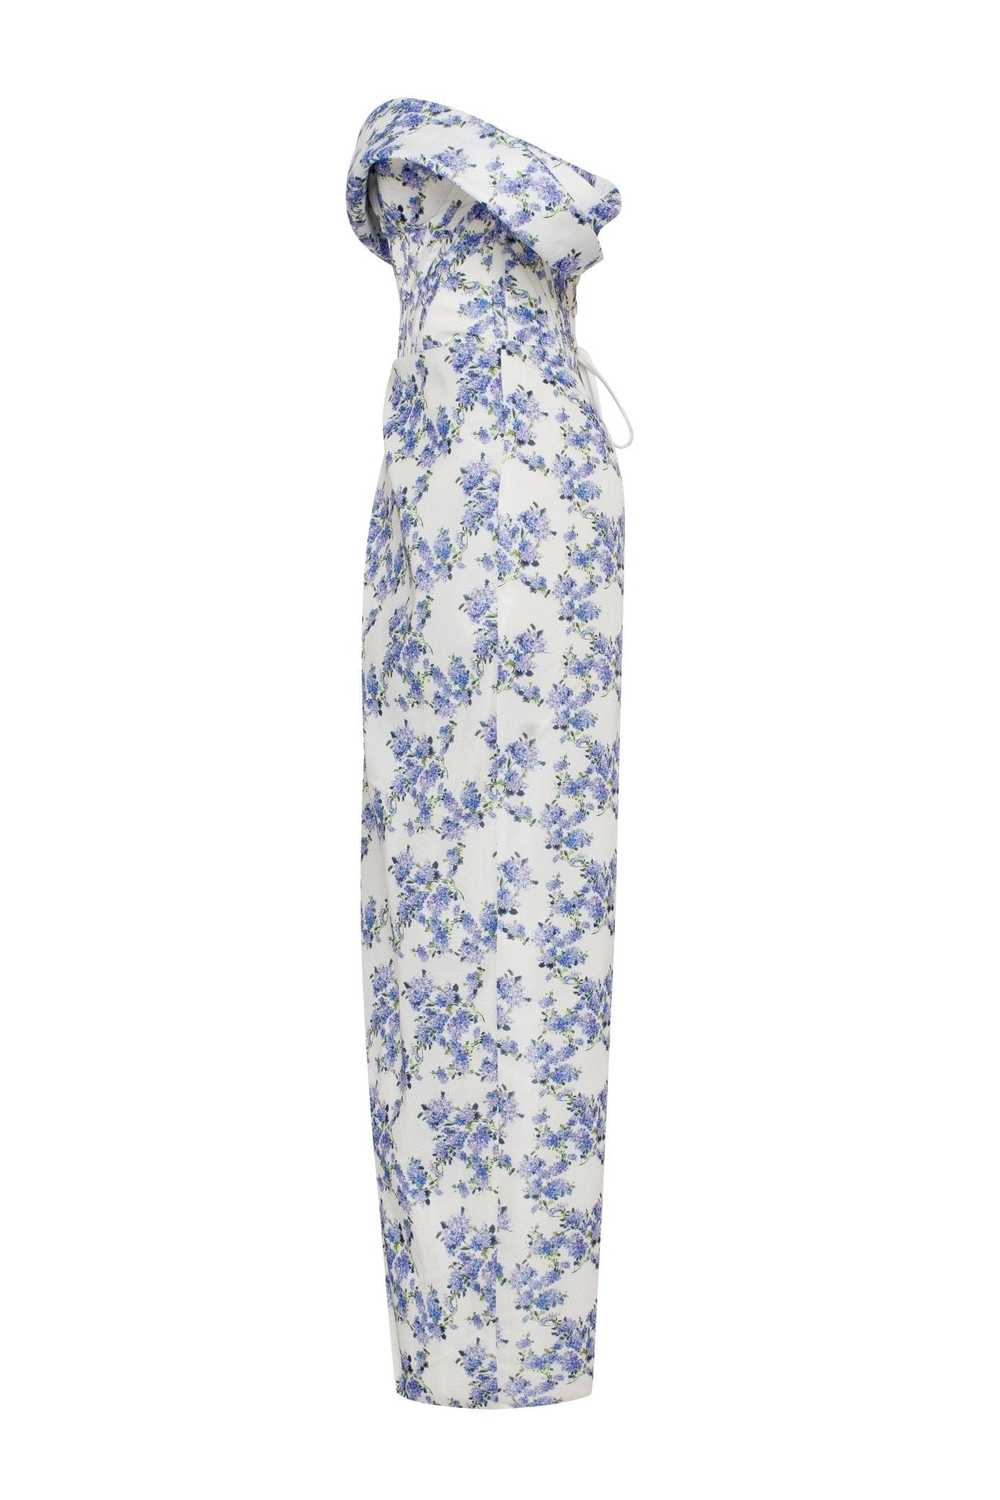 Milla Blue Hydrangea off-shoulder satin dress - image 7